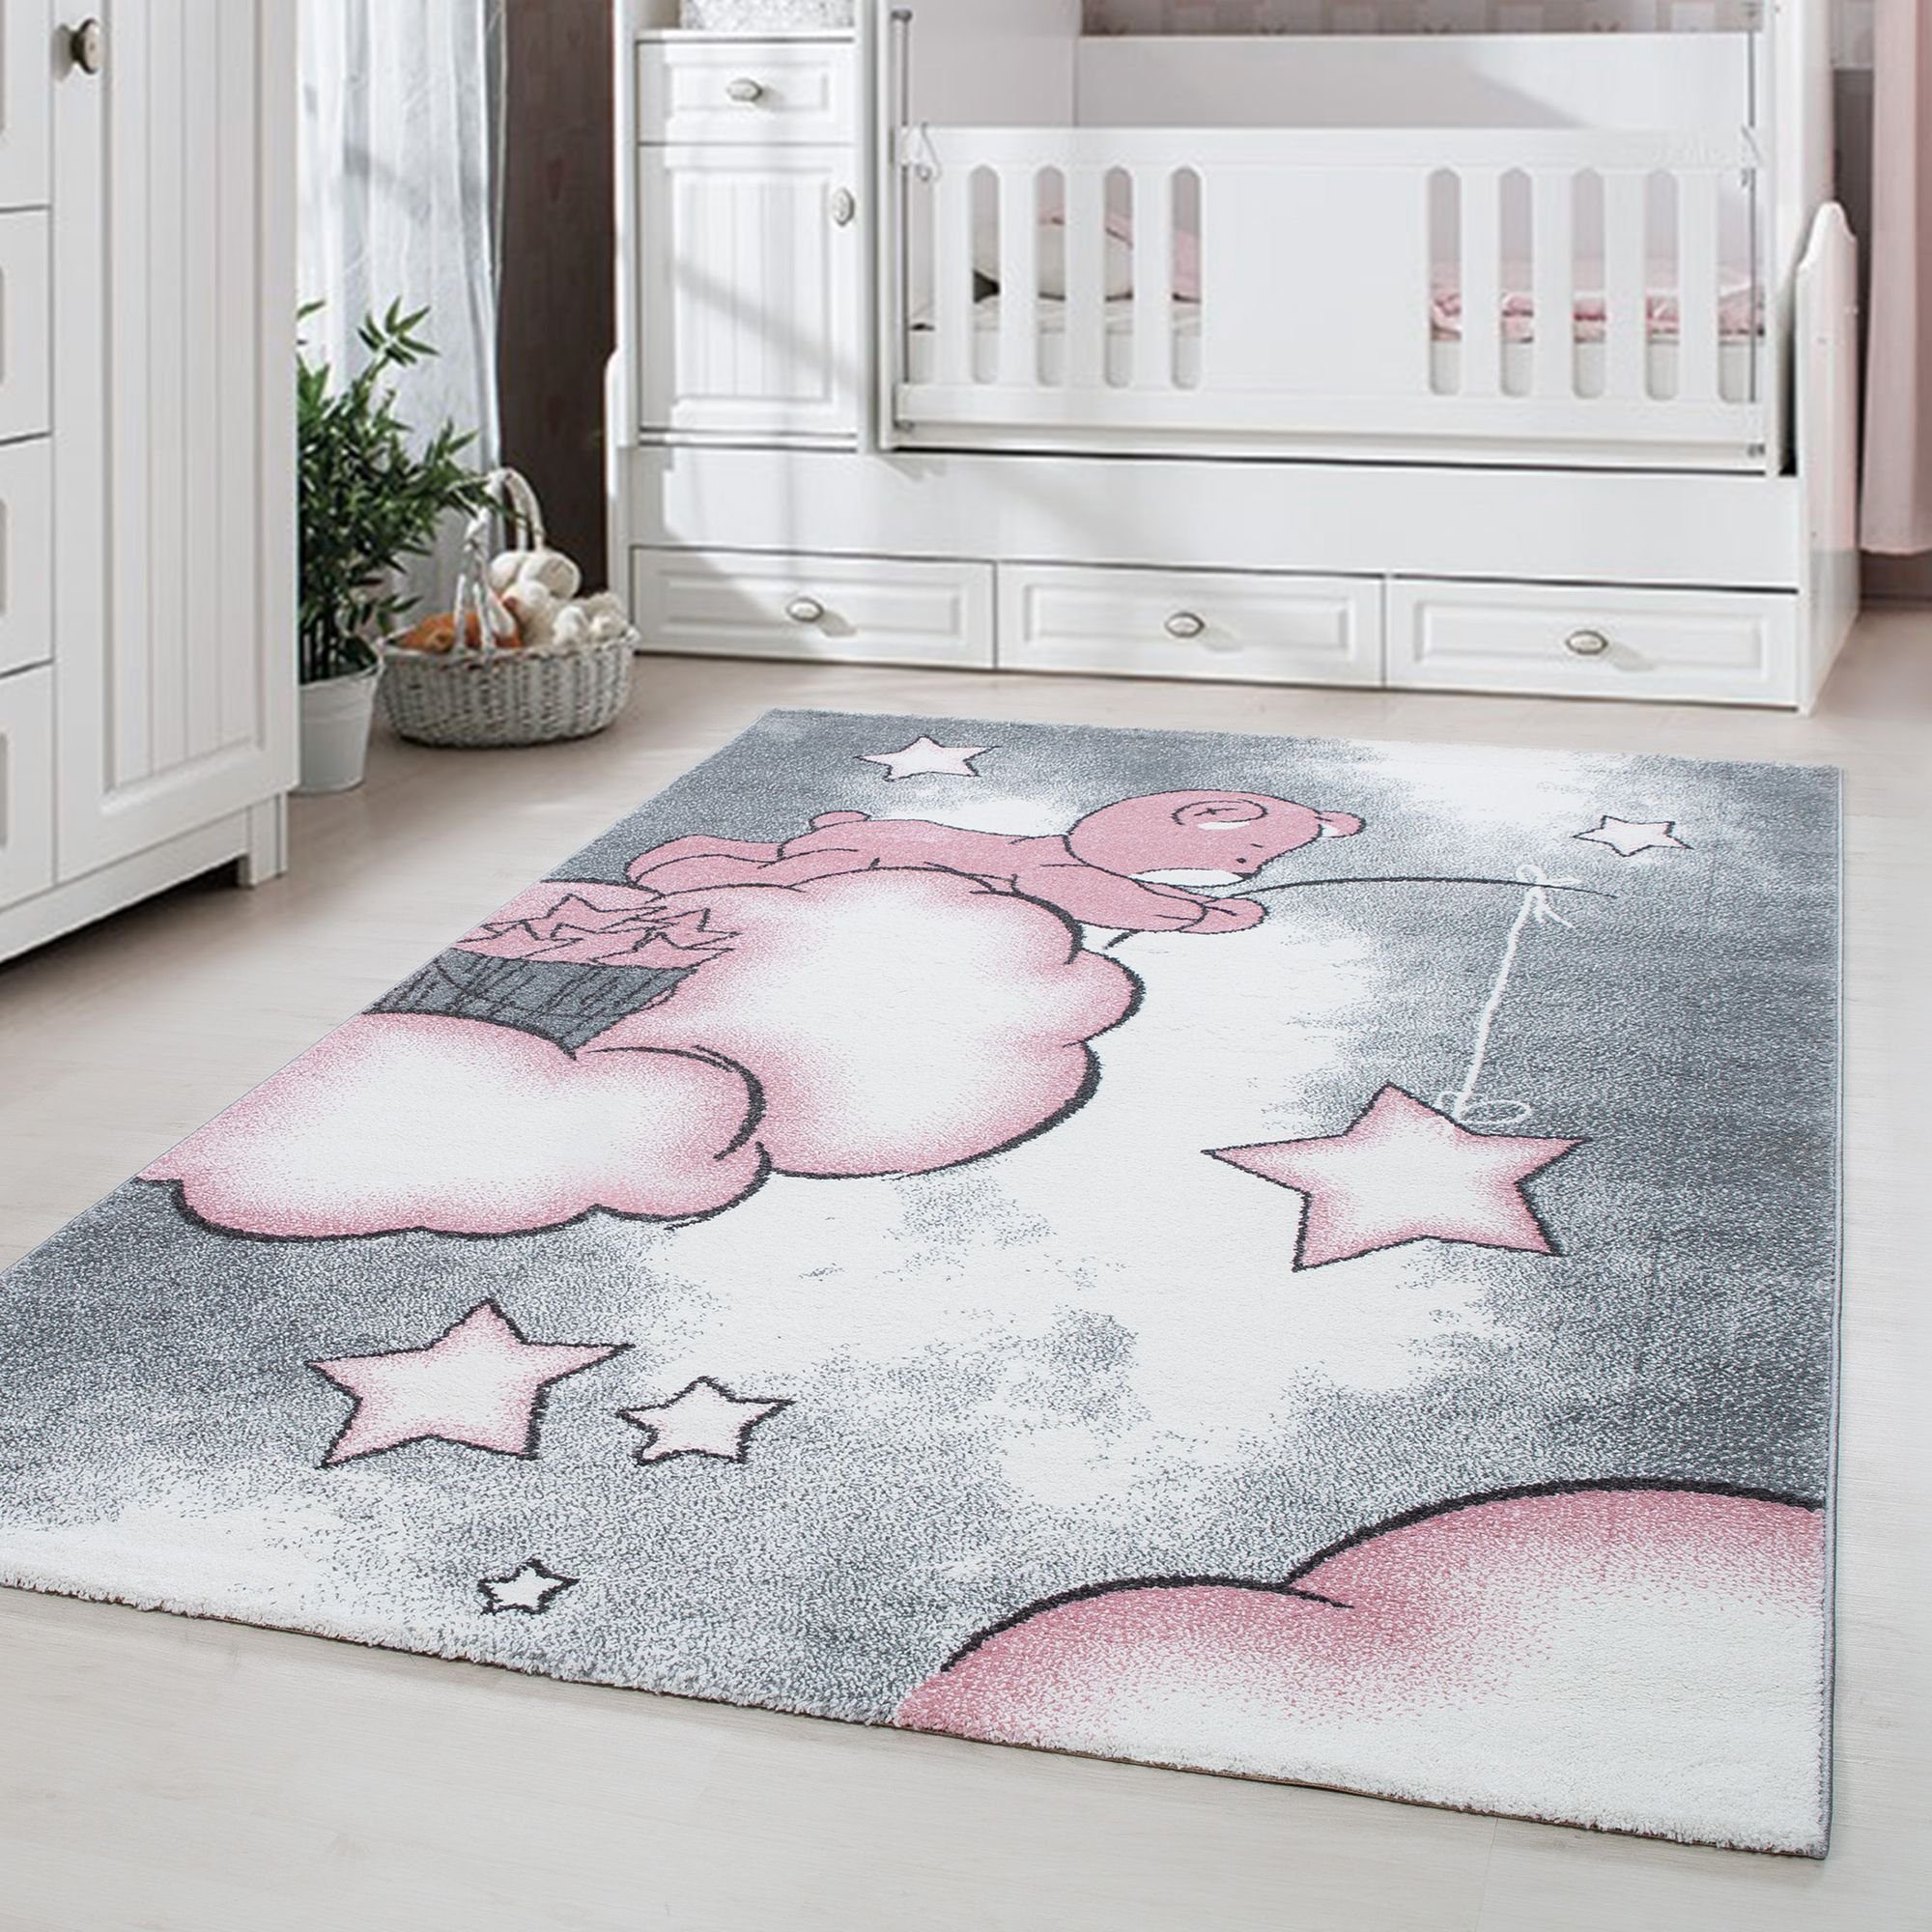 Kinderteppich Bär Design, Carpetsale24, Kinderteppich Bär-Design Höhe: Pflegeleicht Teppich Rosa Rechteckig, Kinderzimmer Baby 11 mm